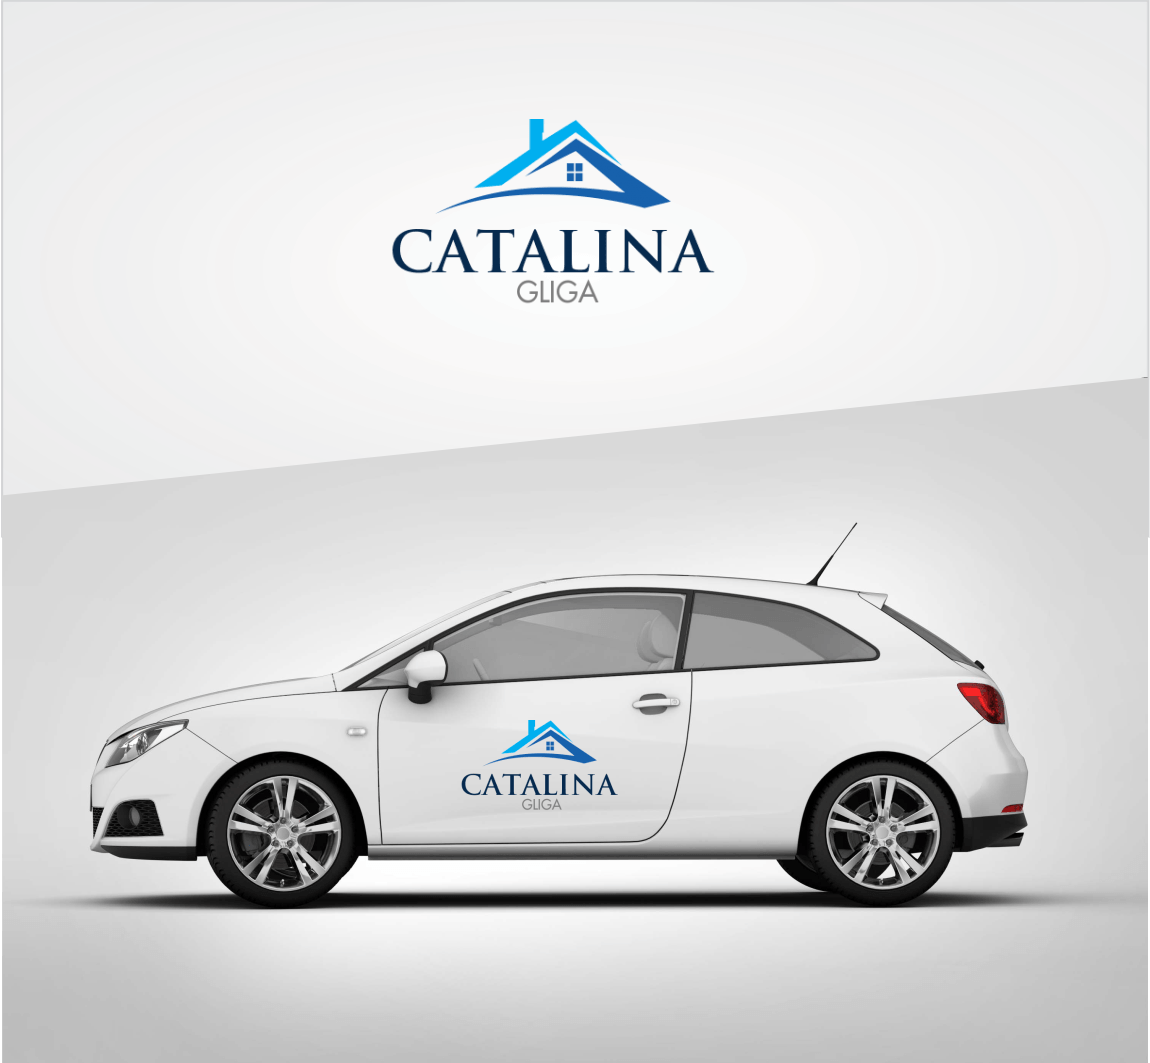 Catalina Car Logo - Elegant, Playful, Architecture Logo Design for CATALINA GLIGA